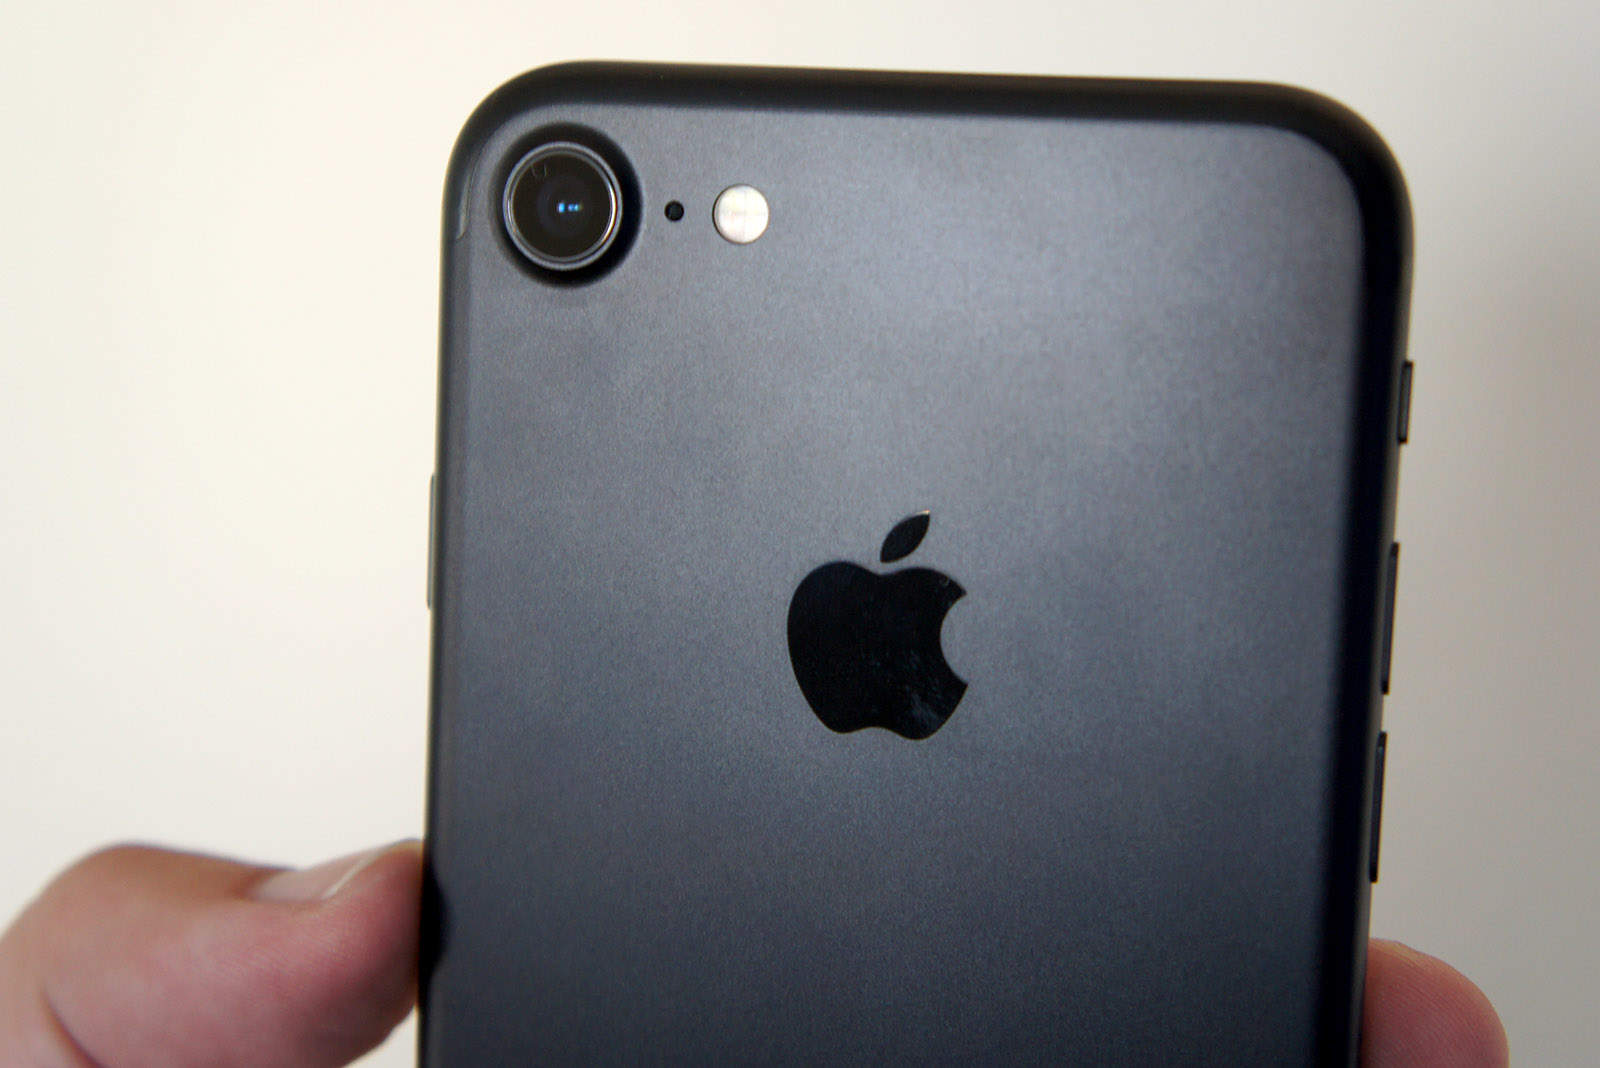 iPhone 7 iSight camera